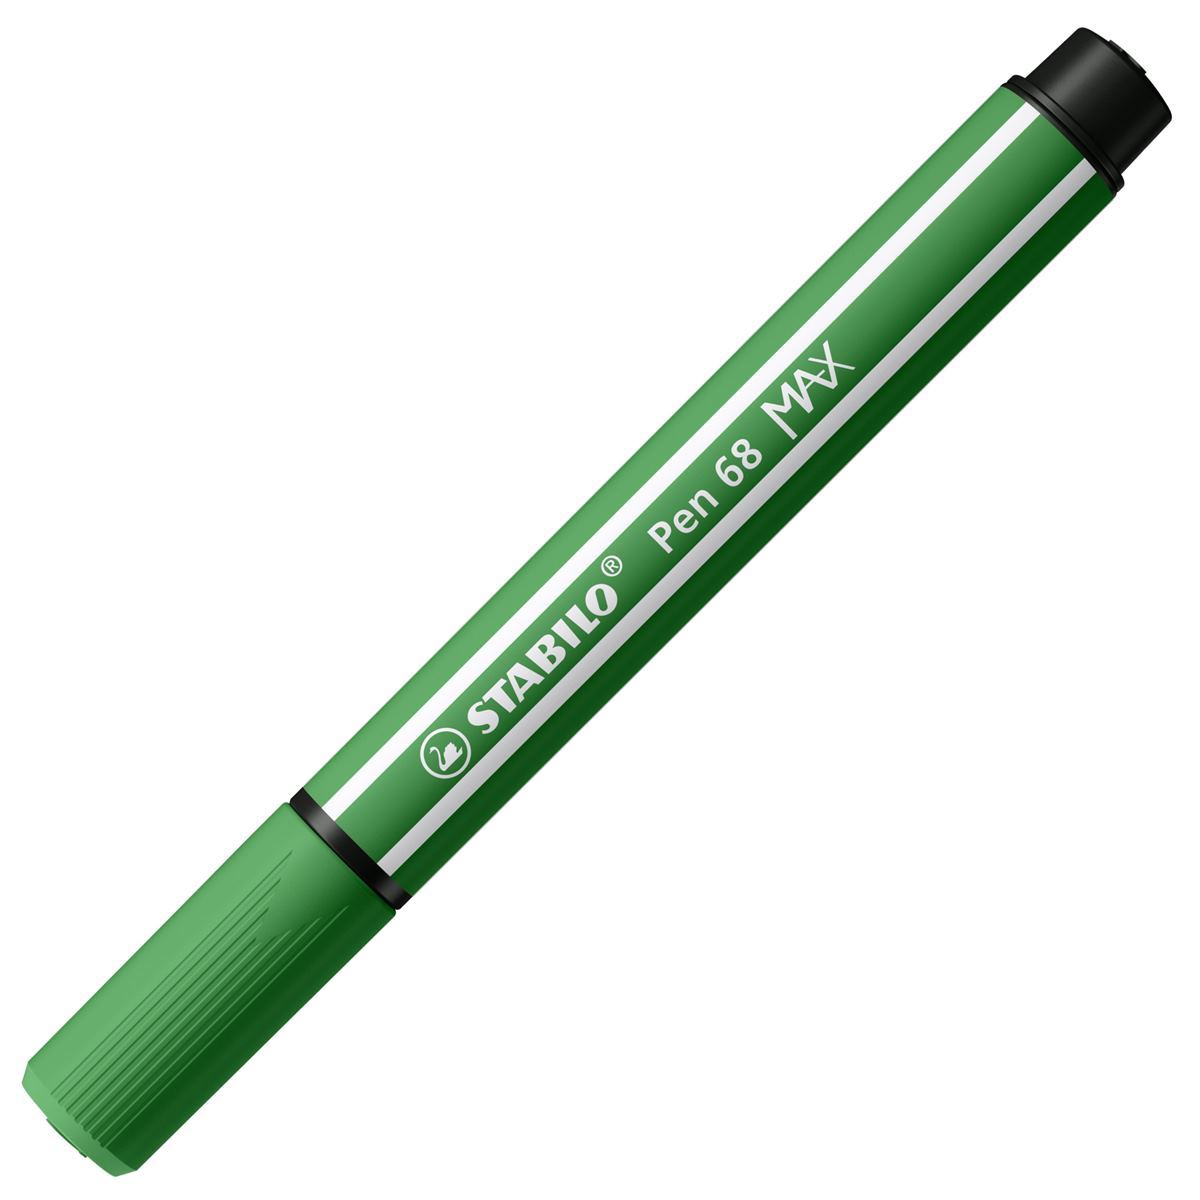 STABILO Pen 68 MAX Arty Fibre-tip Pens - Pack of 4